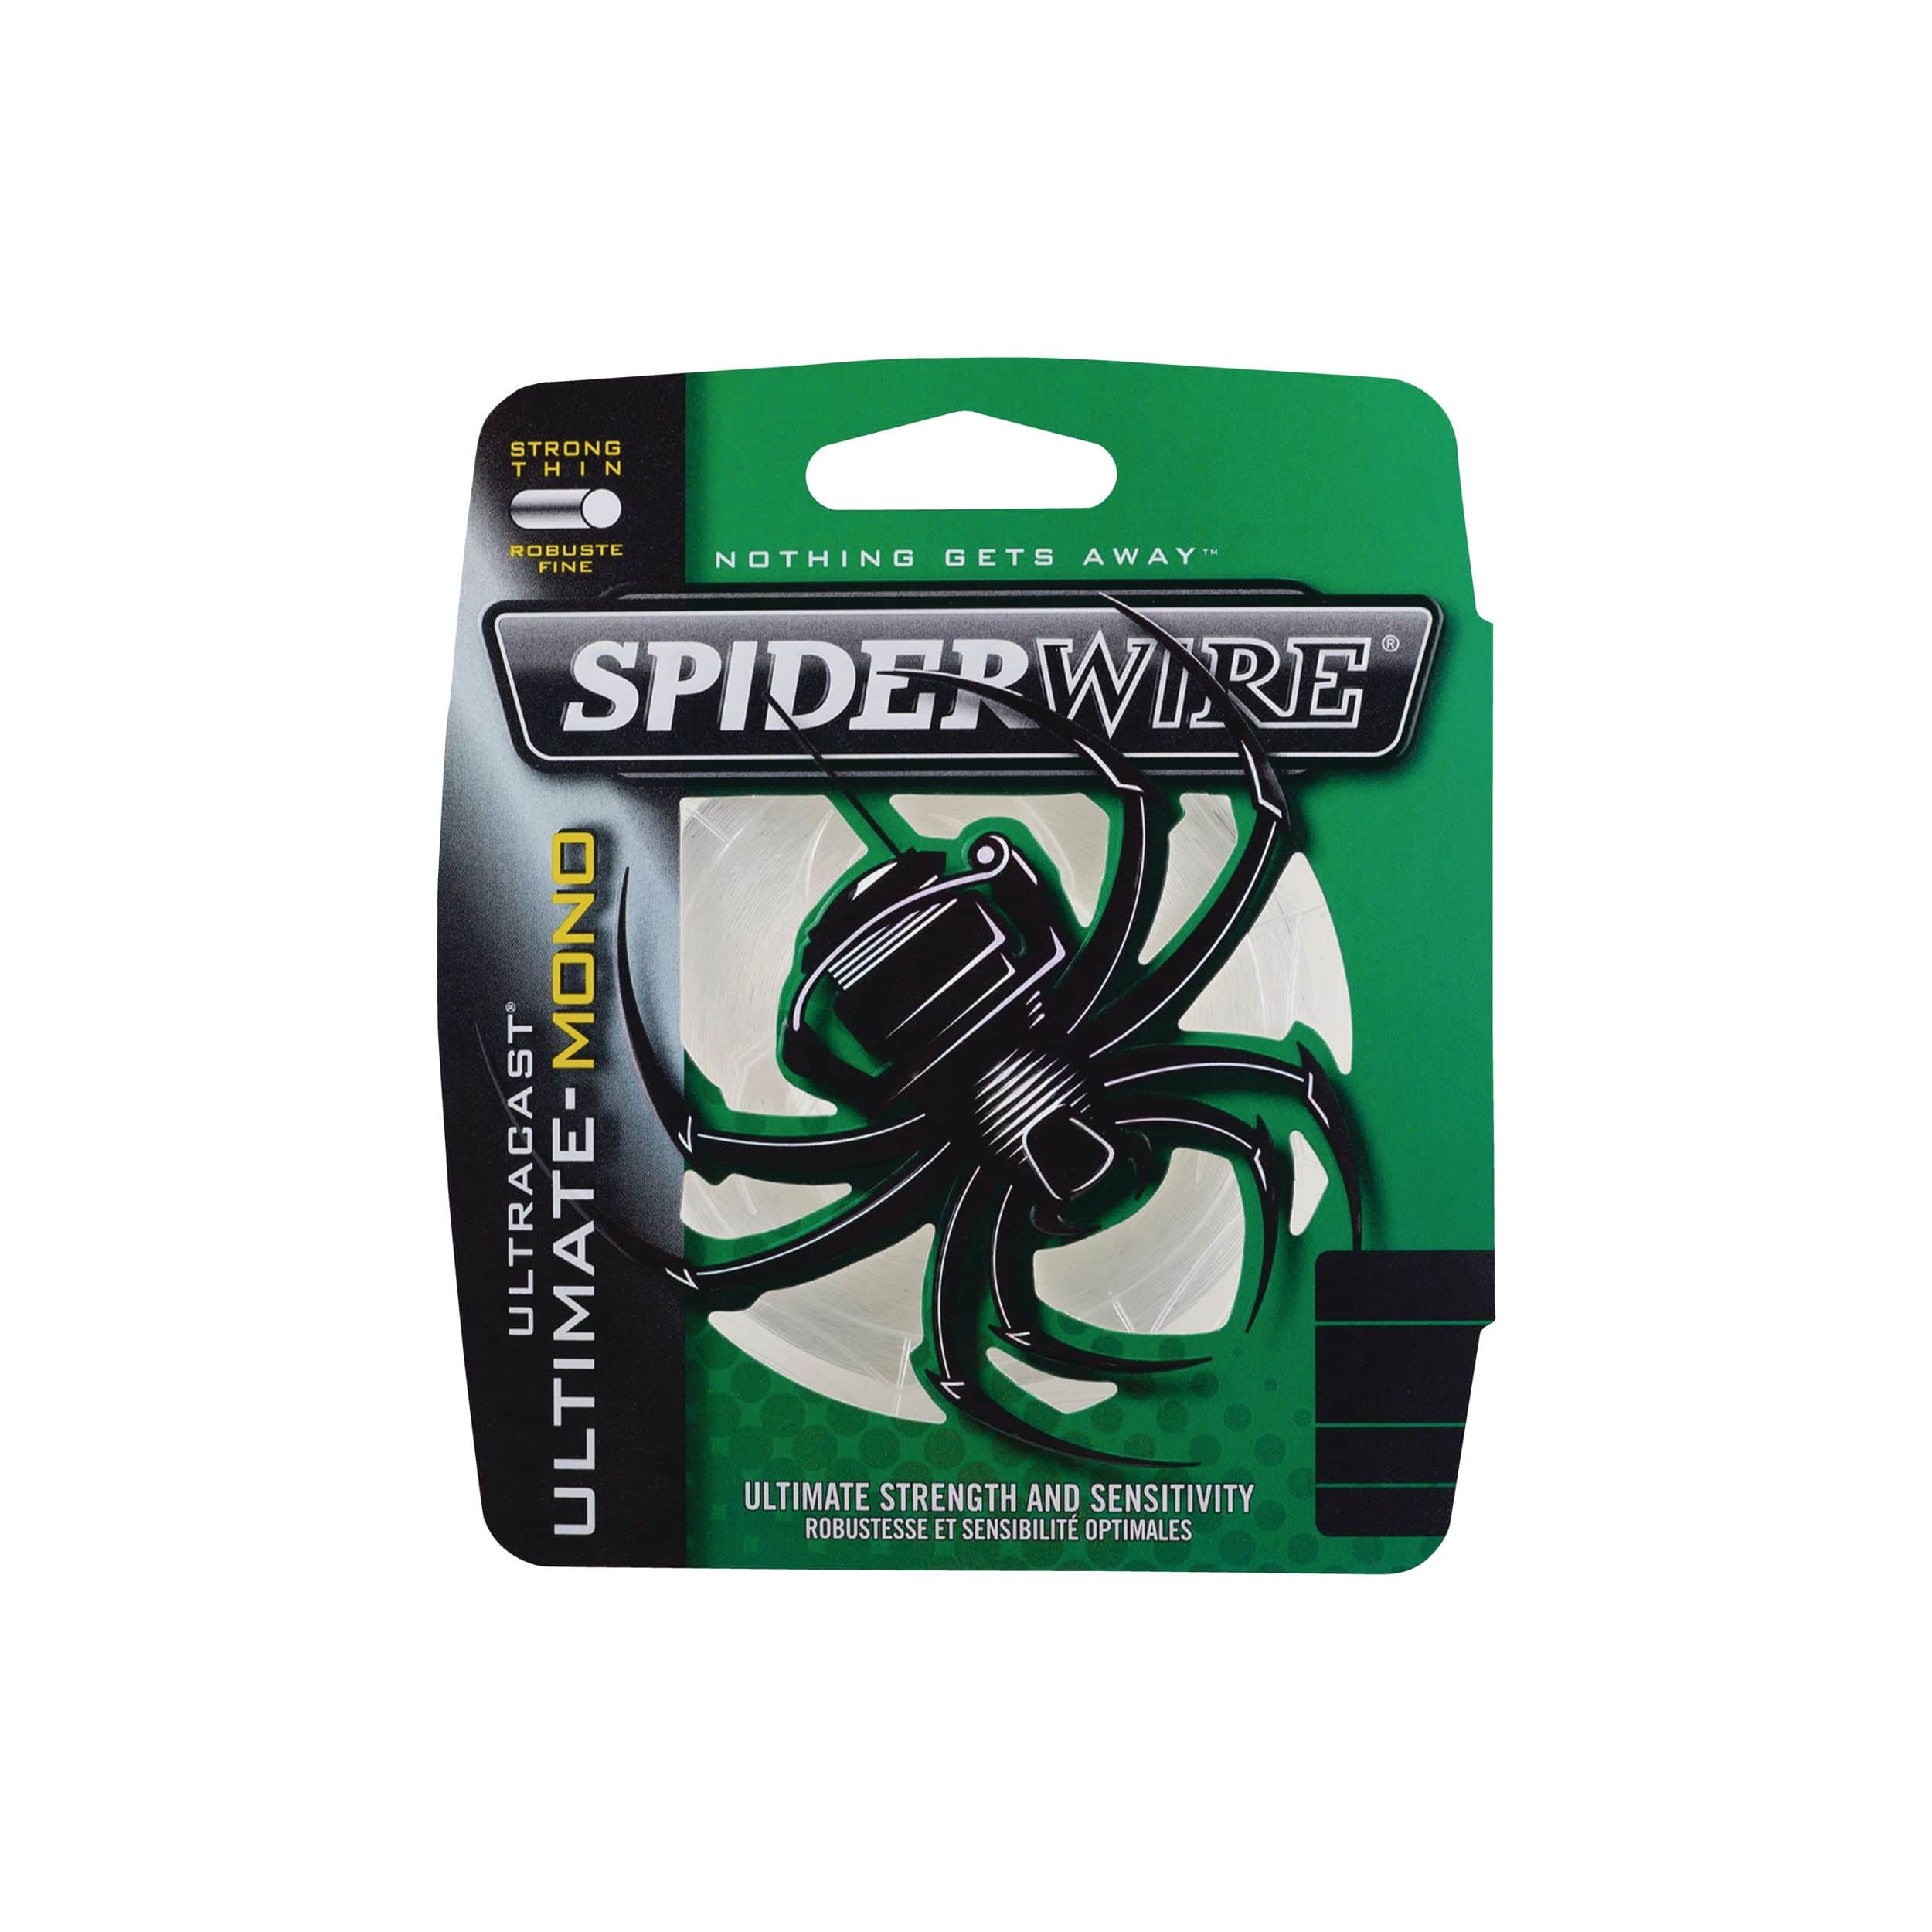 Spiderwire Super Braided Fishing Line, Green